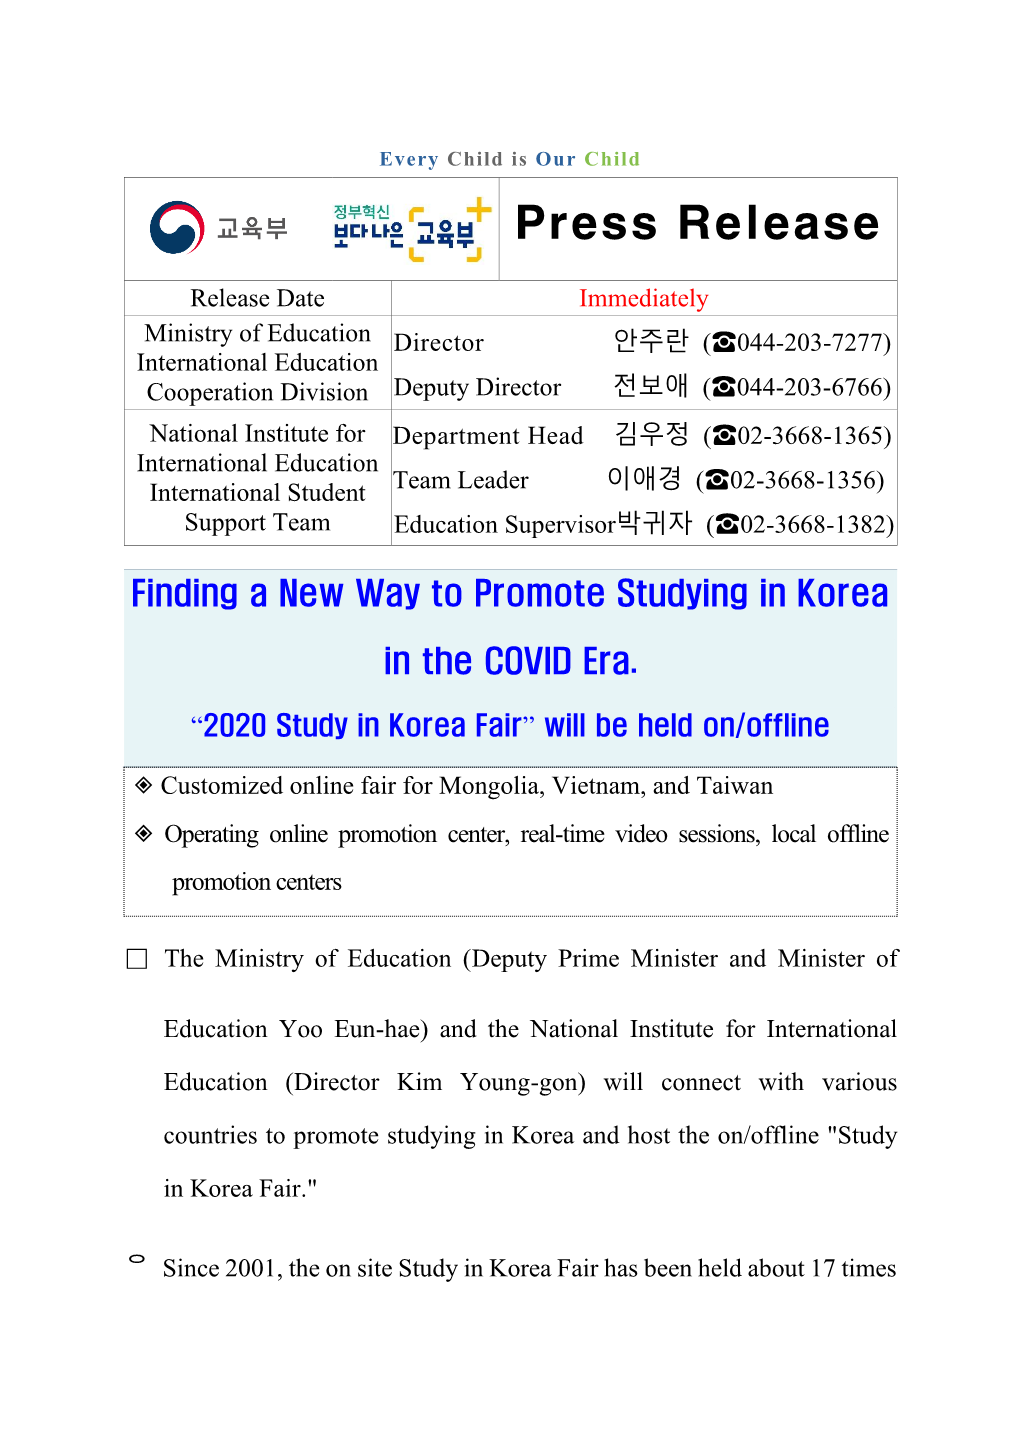 Changes in the 2020 Overseas Study in Korea Fair >